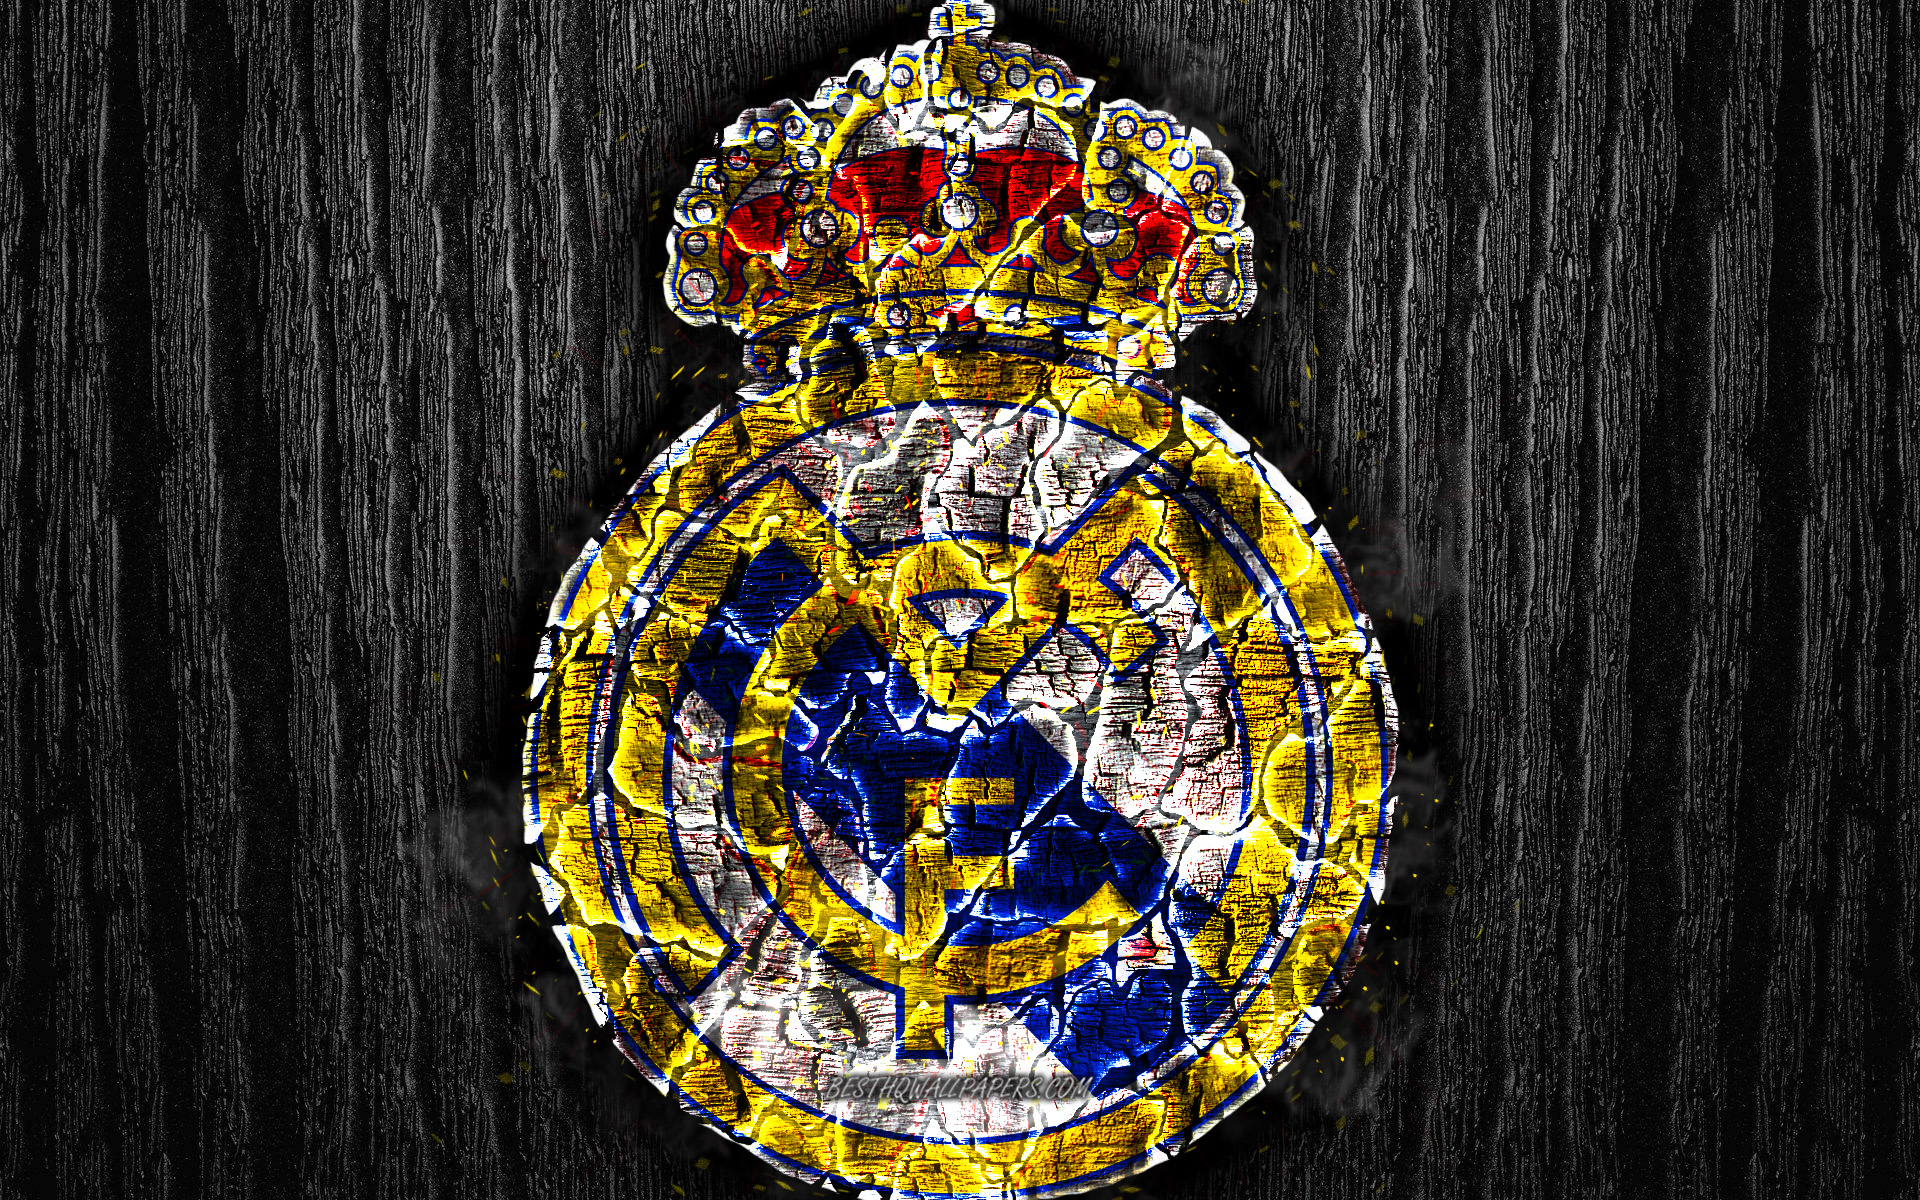 Real Madrid Cf Football Club Wallpapers